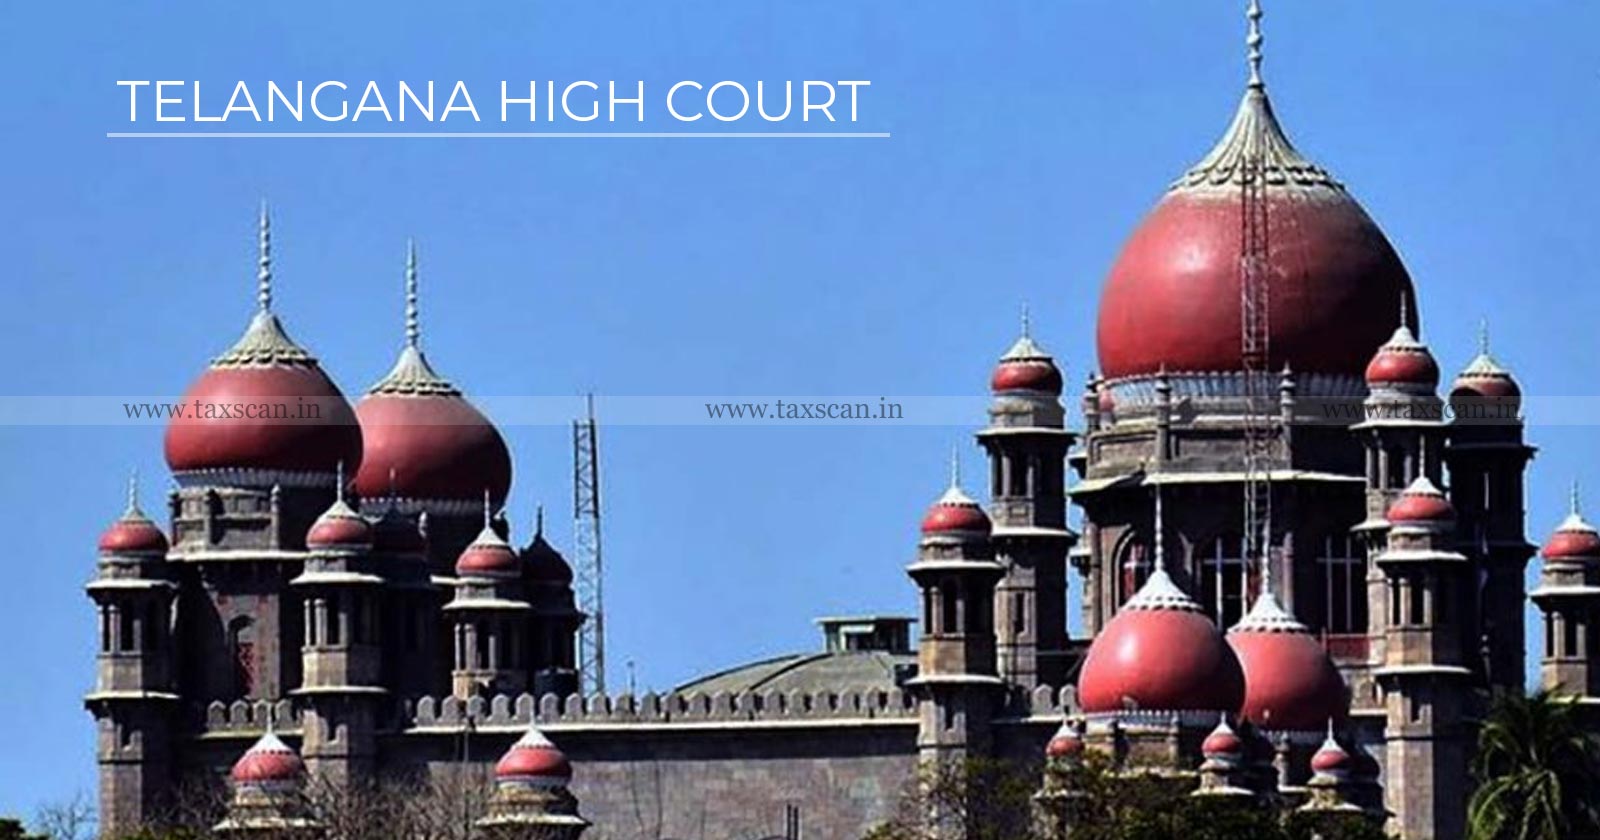 Parallel GST Proceedings - GST Proceedings - Telangana High Court - taxscan